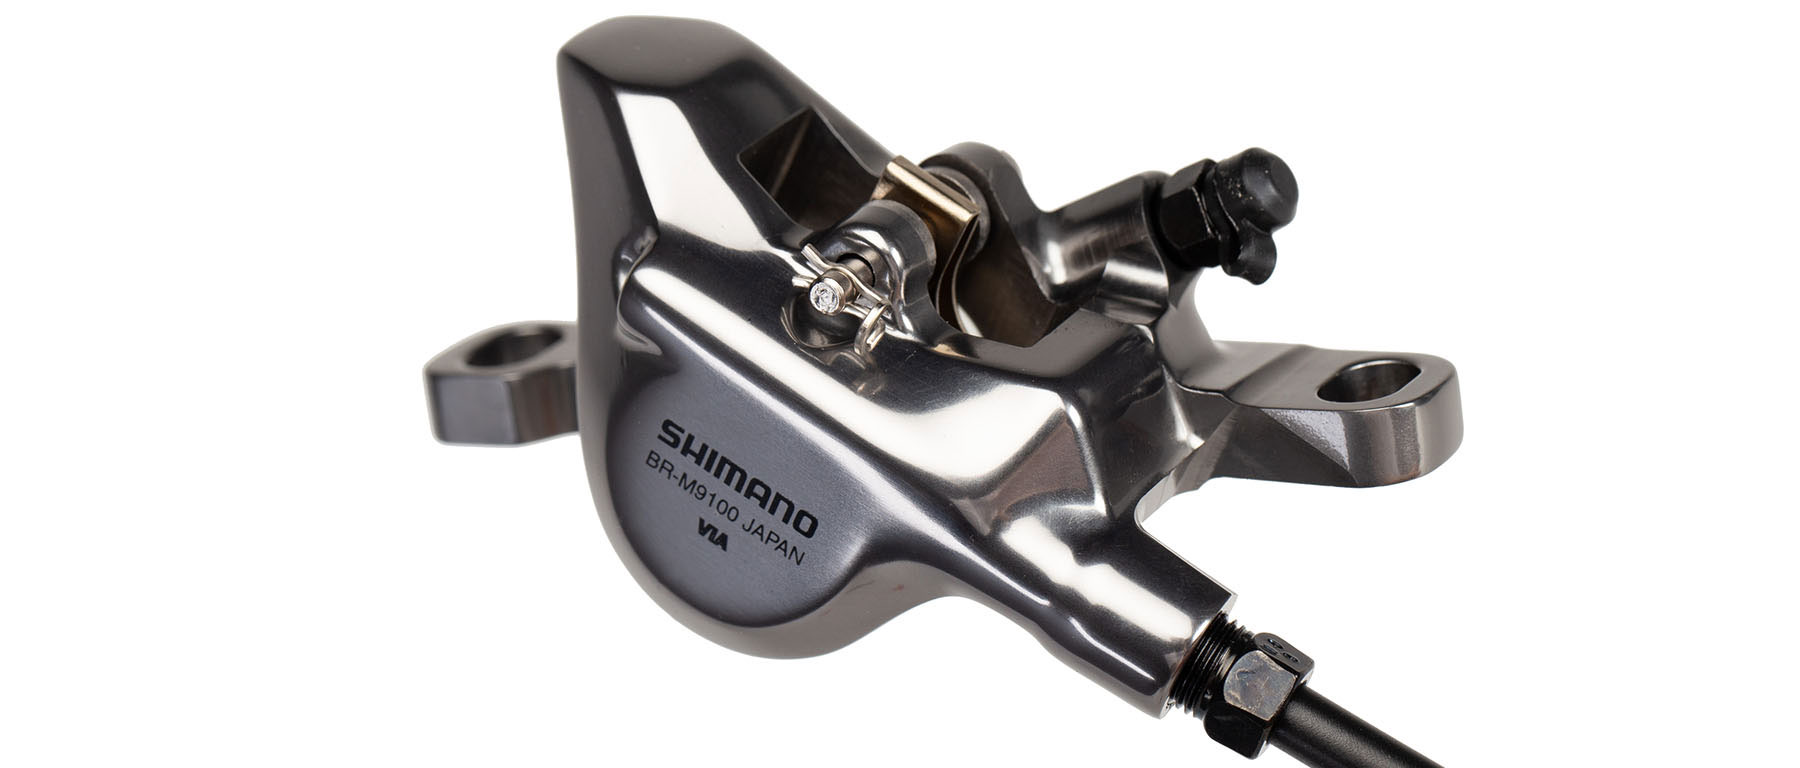 Shimano XTR BR-M9100 Disc Brake